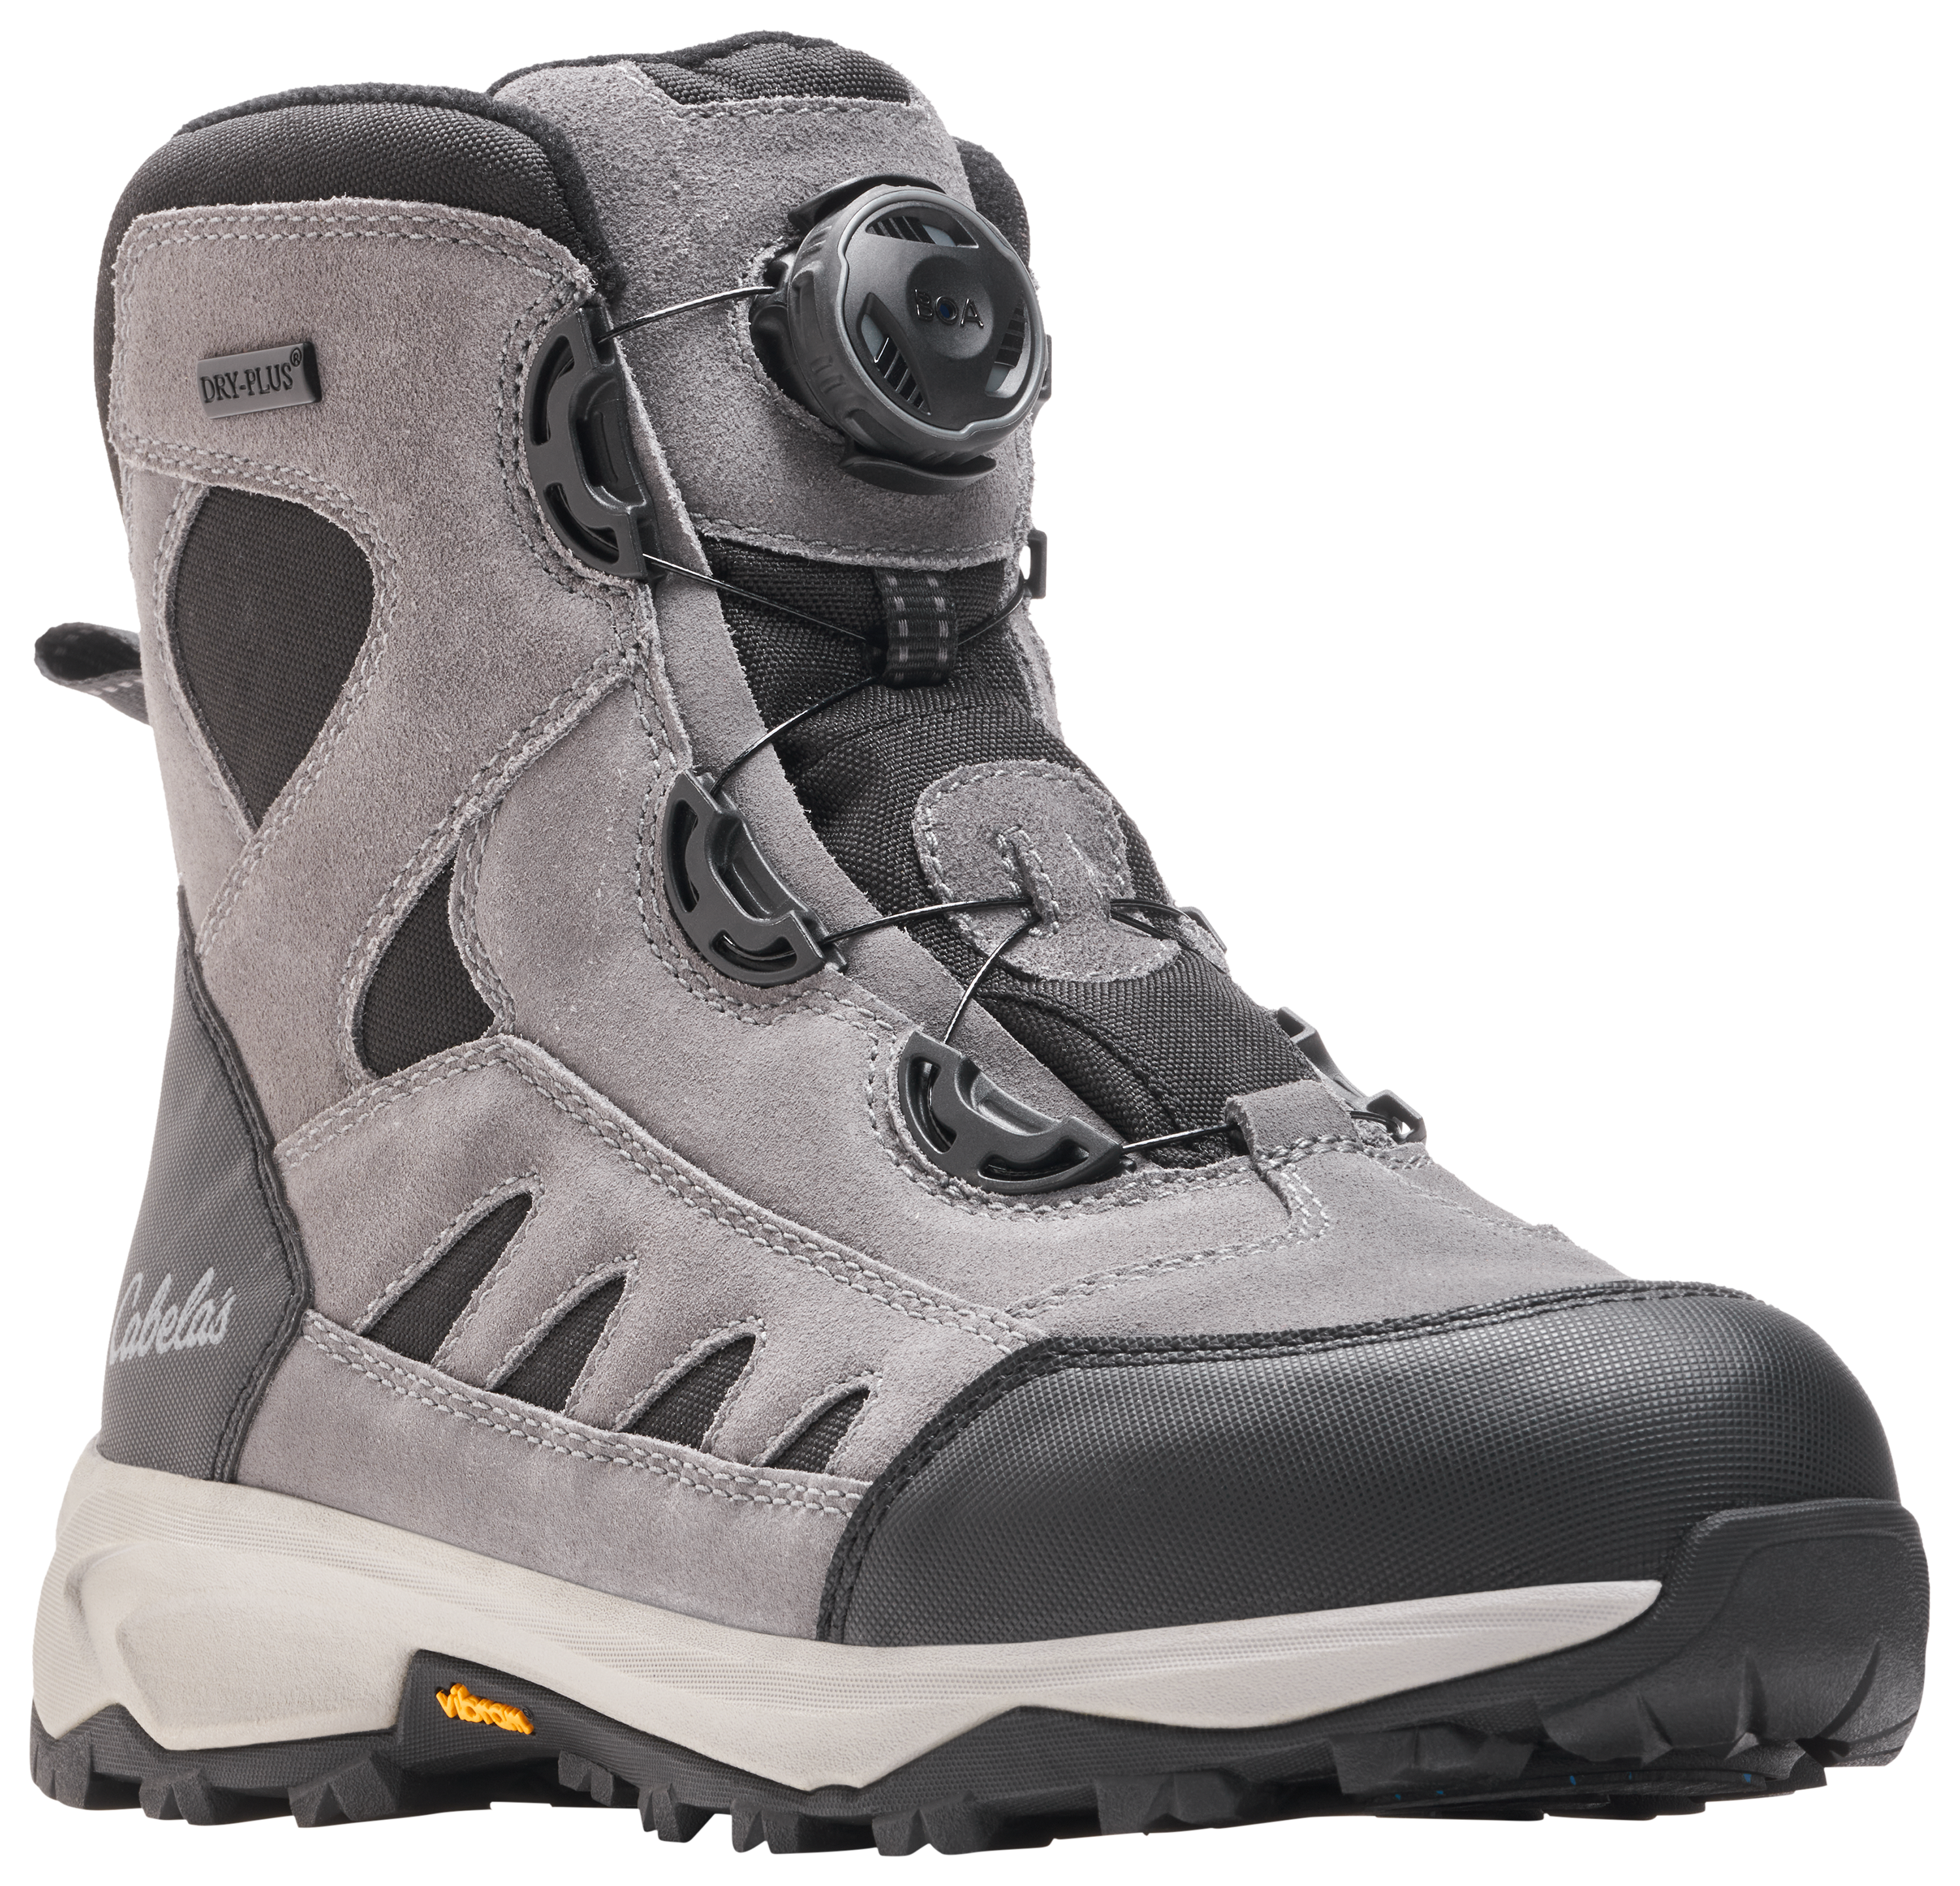 Cabela's Snow Runner Max 2.0 BOA Insulated Waterproof Winter Boots for Men - Granite Gray - 8.5M